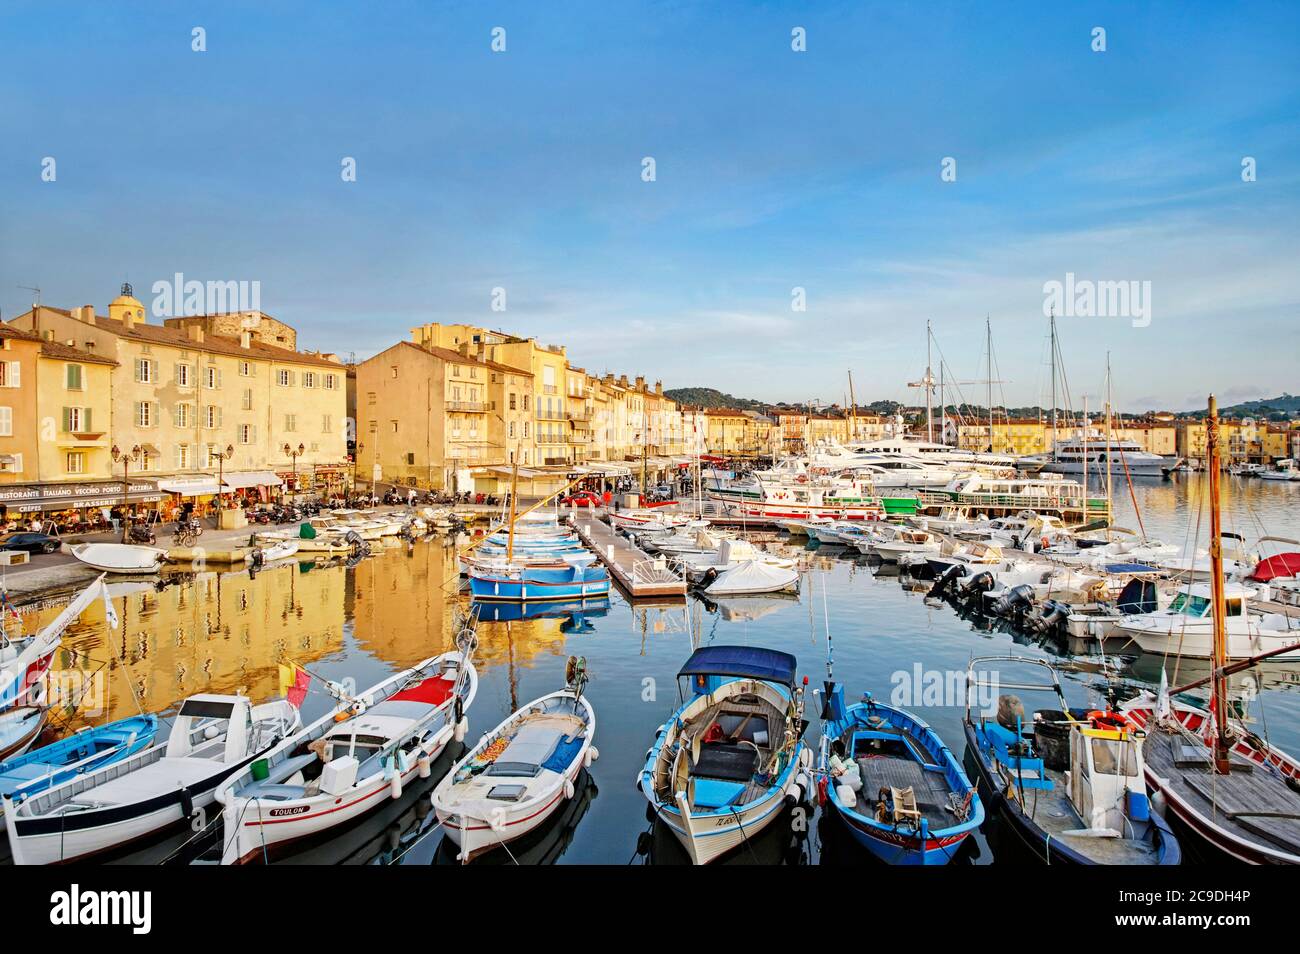 Saint Tropez - France - Europe, 03. June 2015: View of Saint-Tropez's small harbor in the Provence-Alpes-Côte d’Azur region. Stock Photo